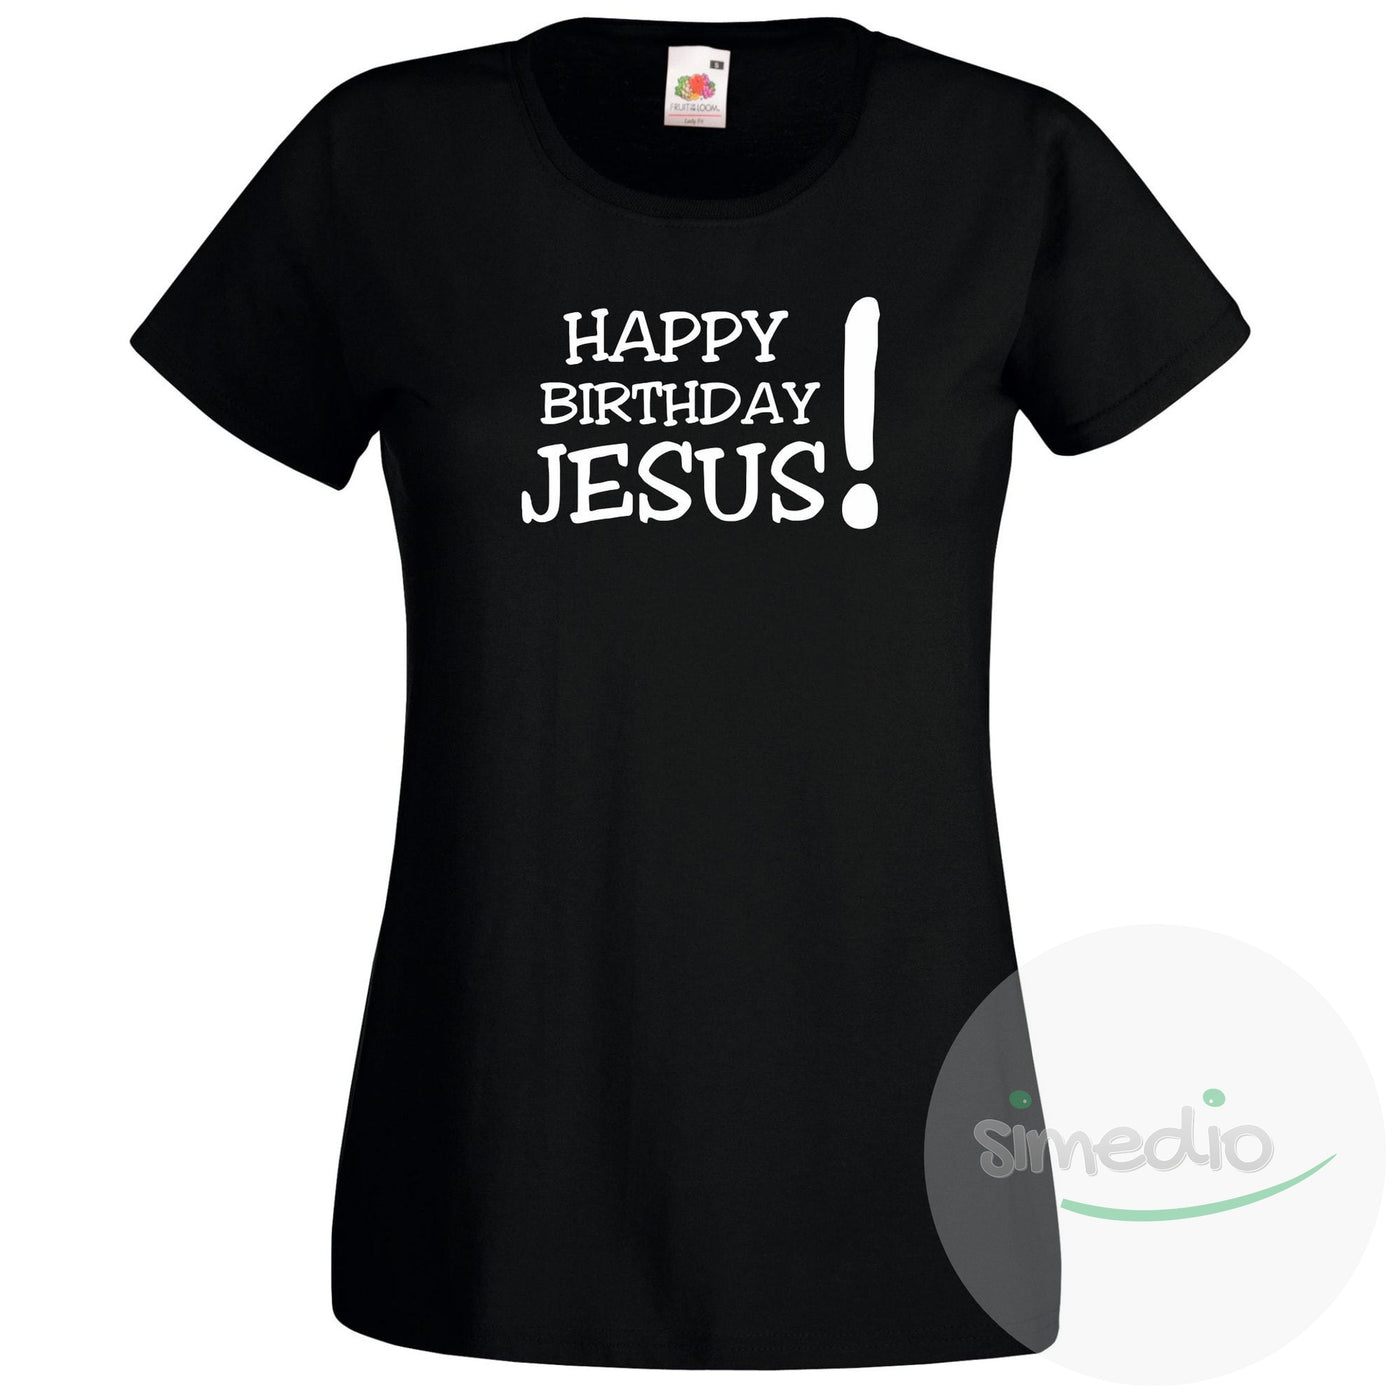 T-shirt Noël : Happy Birthday JESUS!, Noir, S, Femme - SiMEDIO